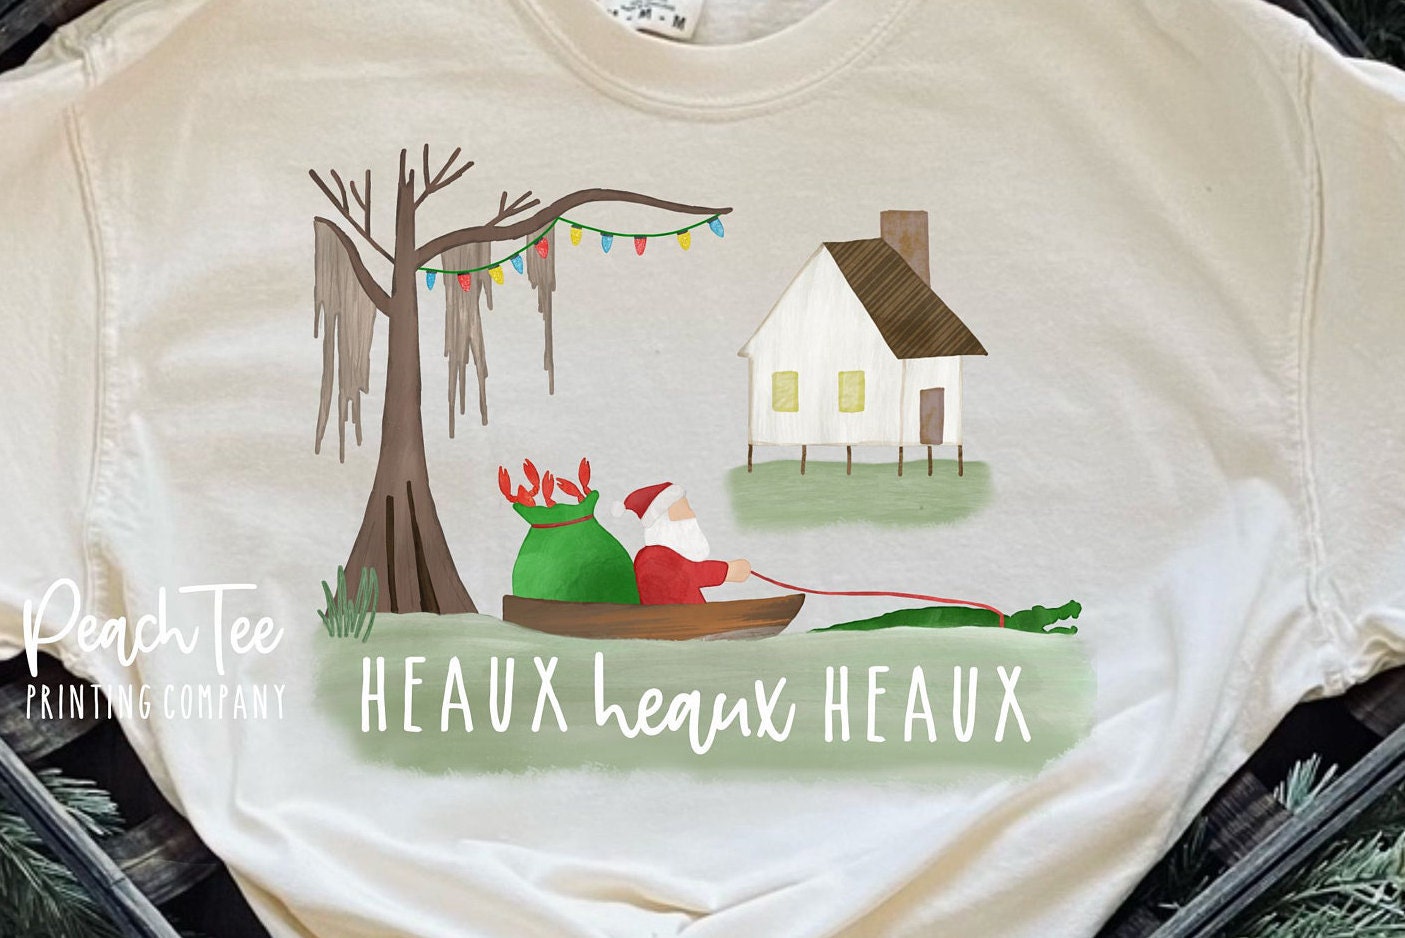 HopeandHobby <3 Louisiana Gift or Souvenir T Shirt for Men Women and Kids Long Sleeve T-Shirt